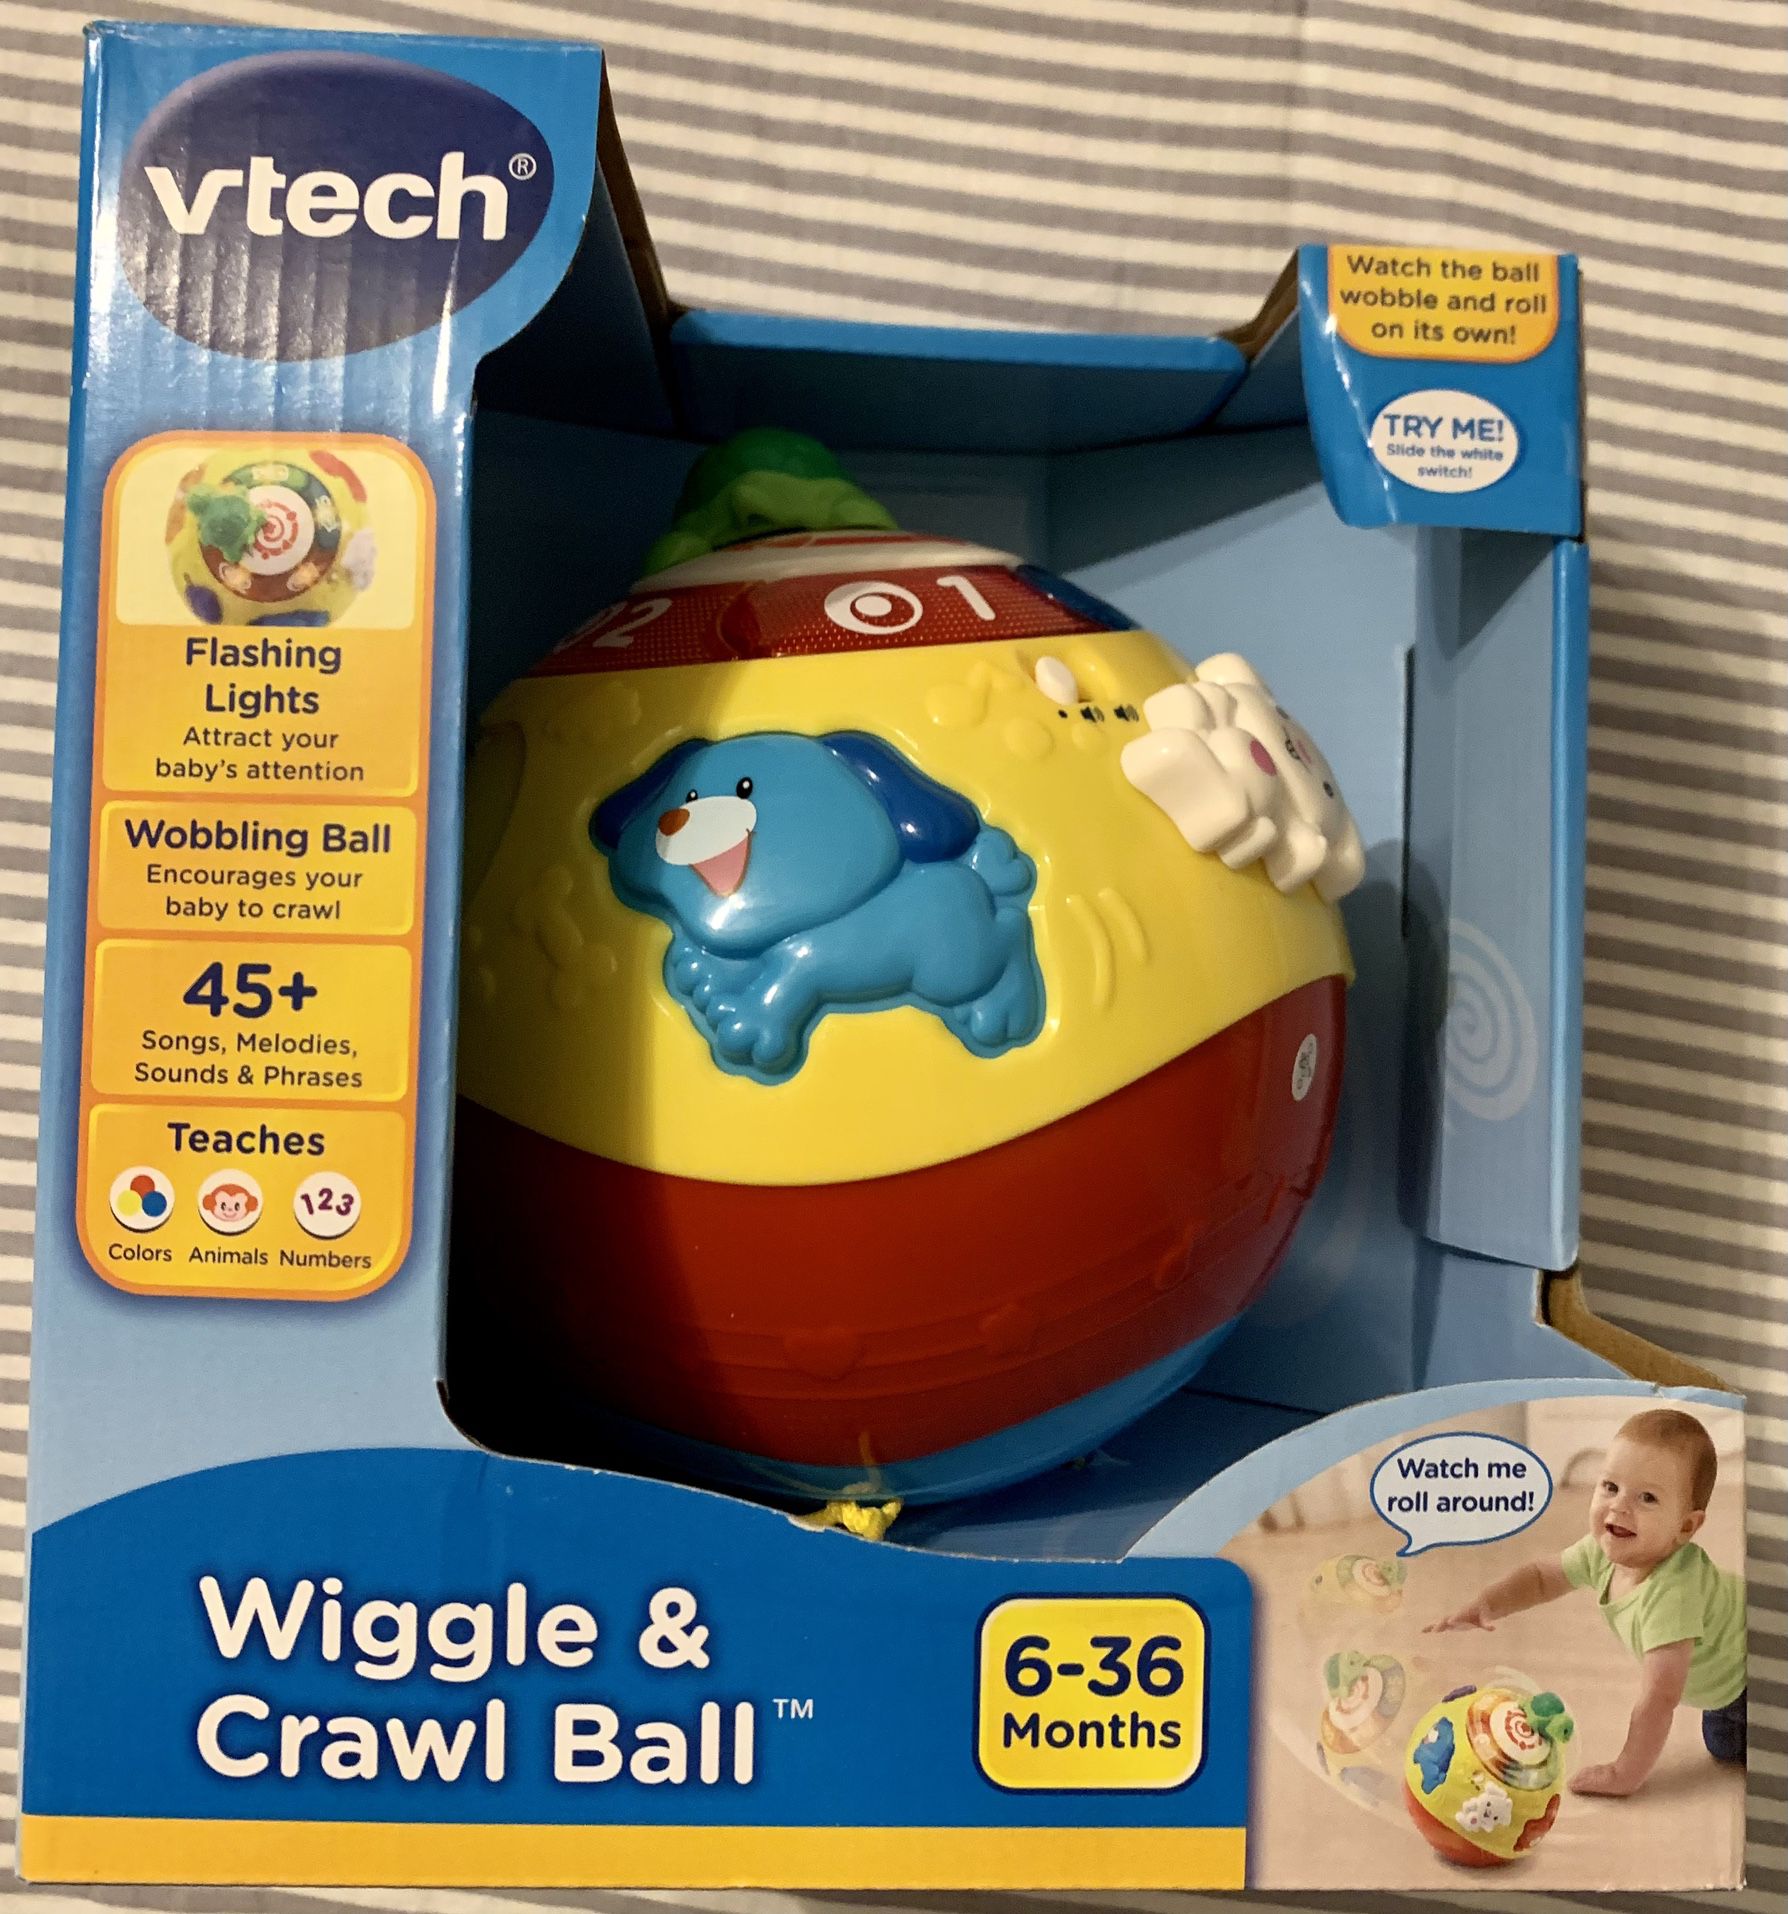 Vtech Wiggle & Crawl Ball - $10